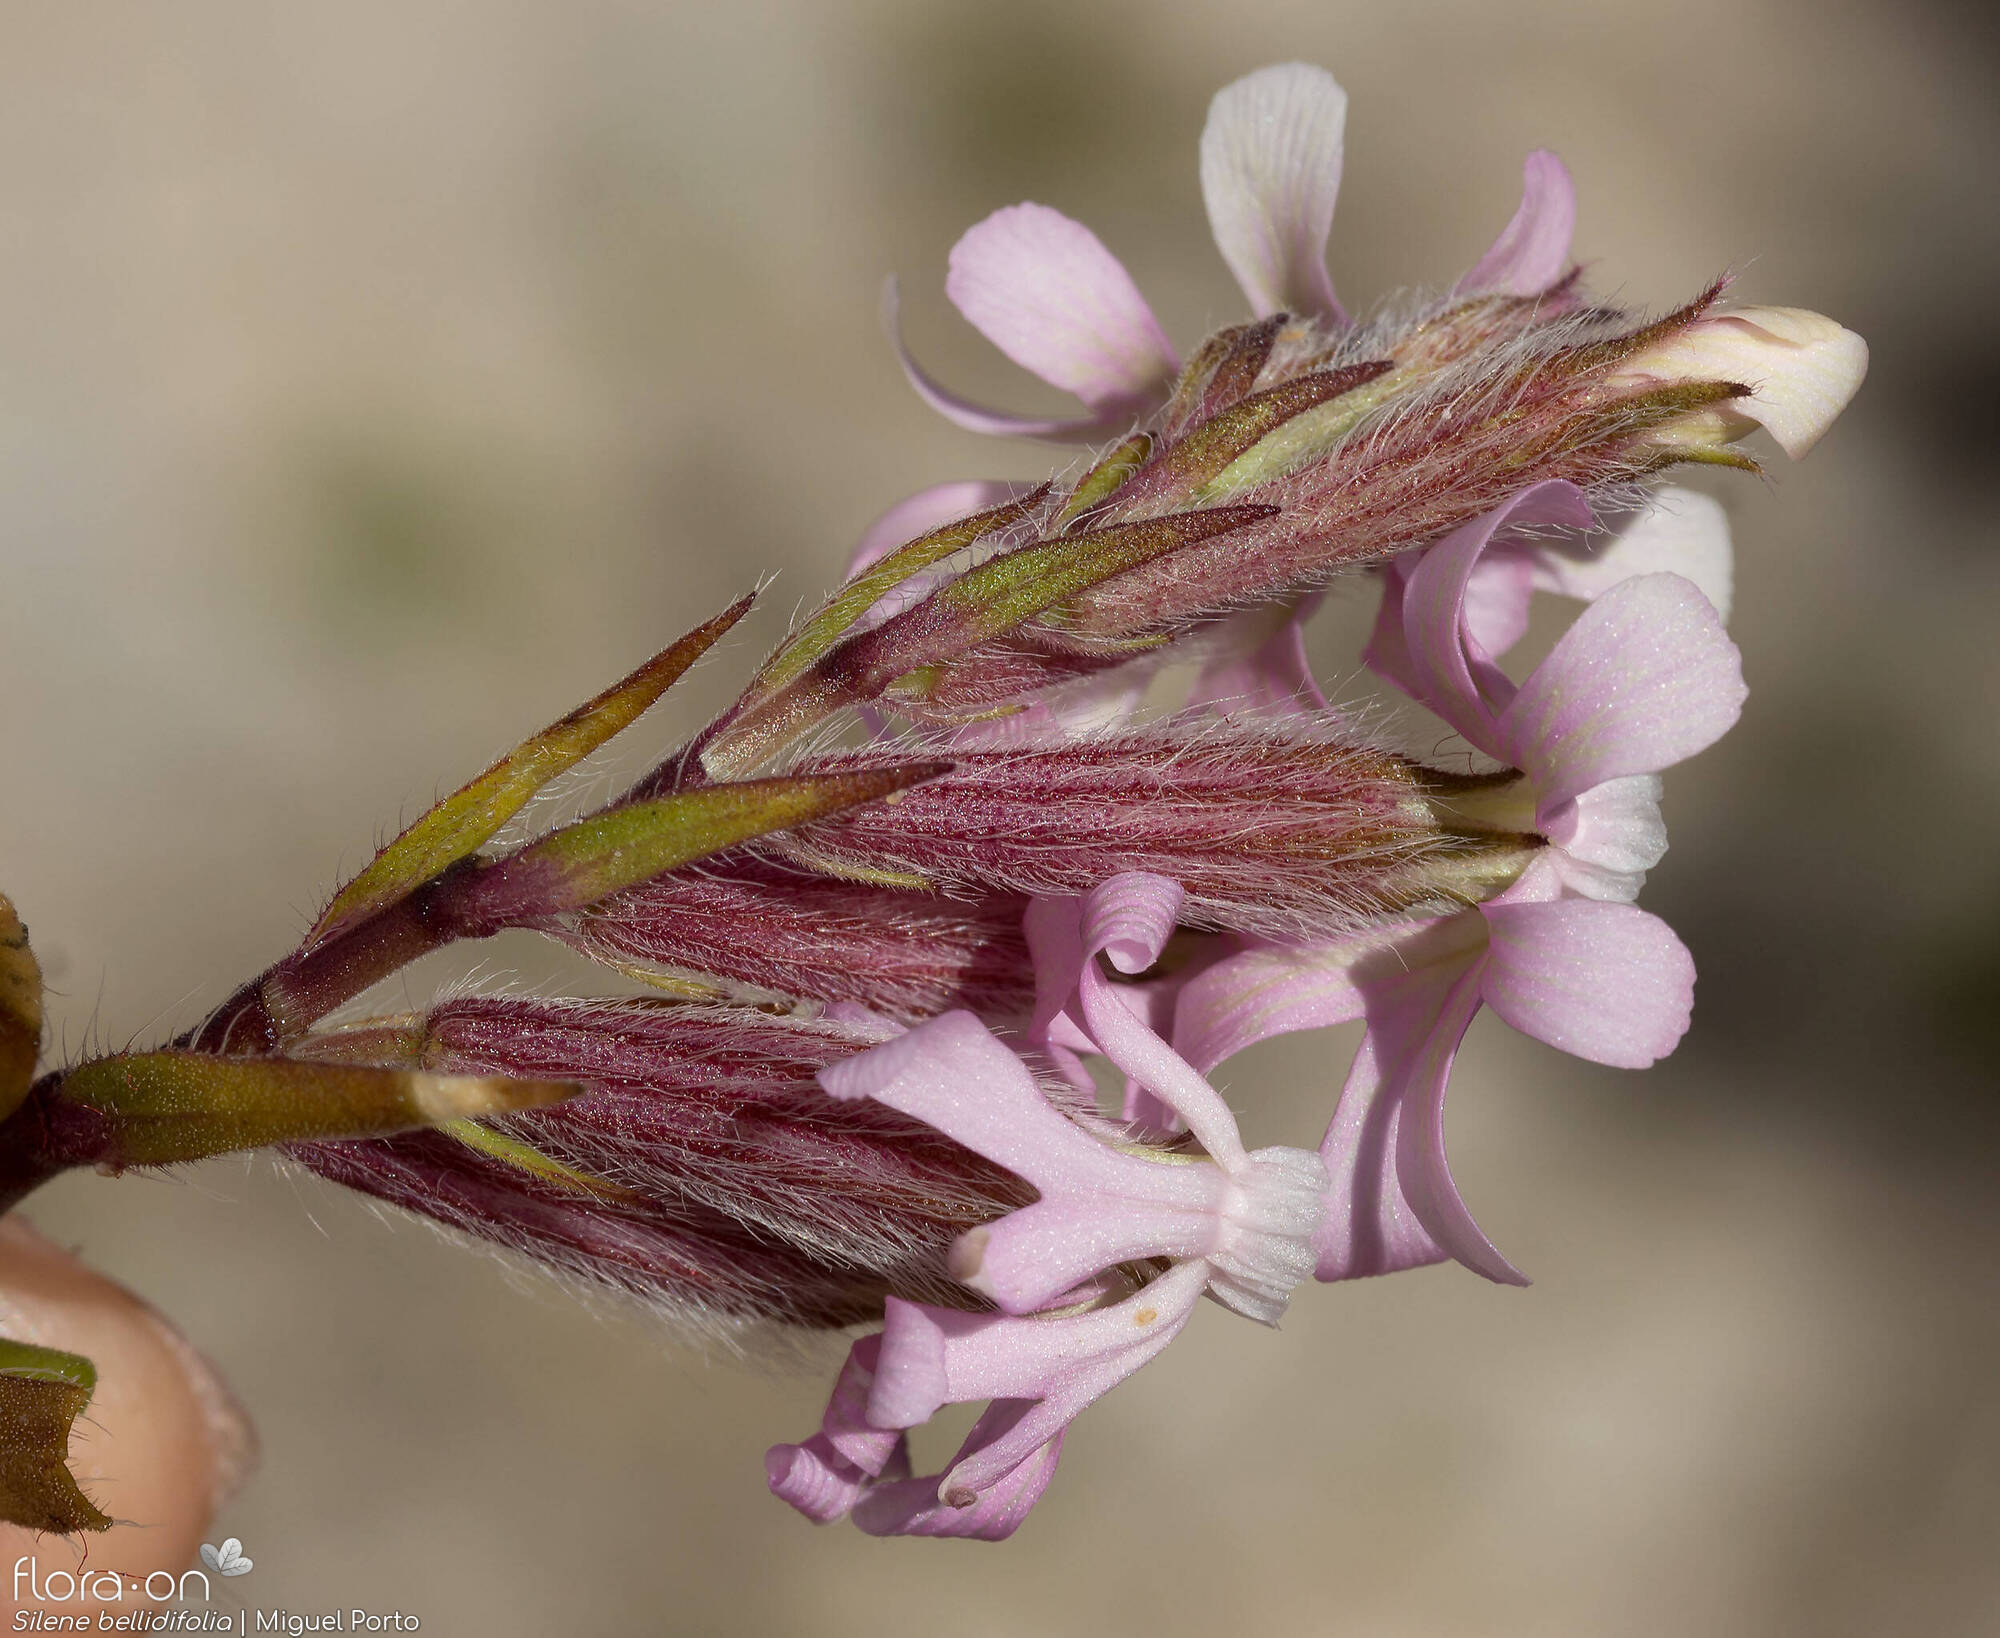 Silene bellidifolia - Flor (geral) | Miguel Porto; CC BY-NC 4.0